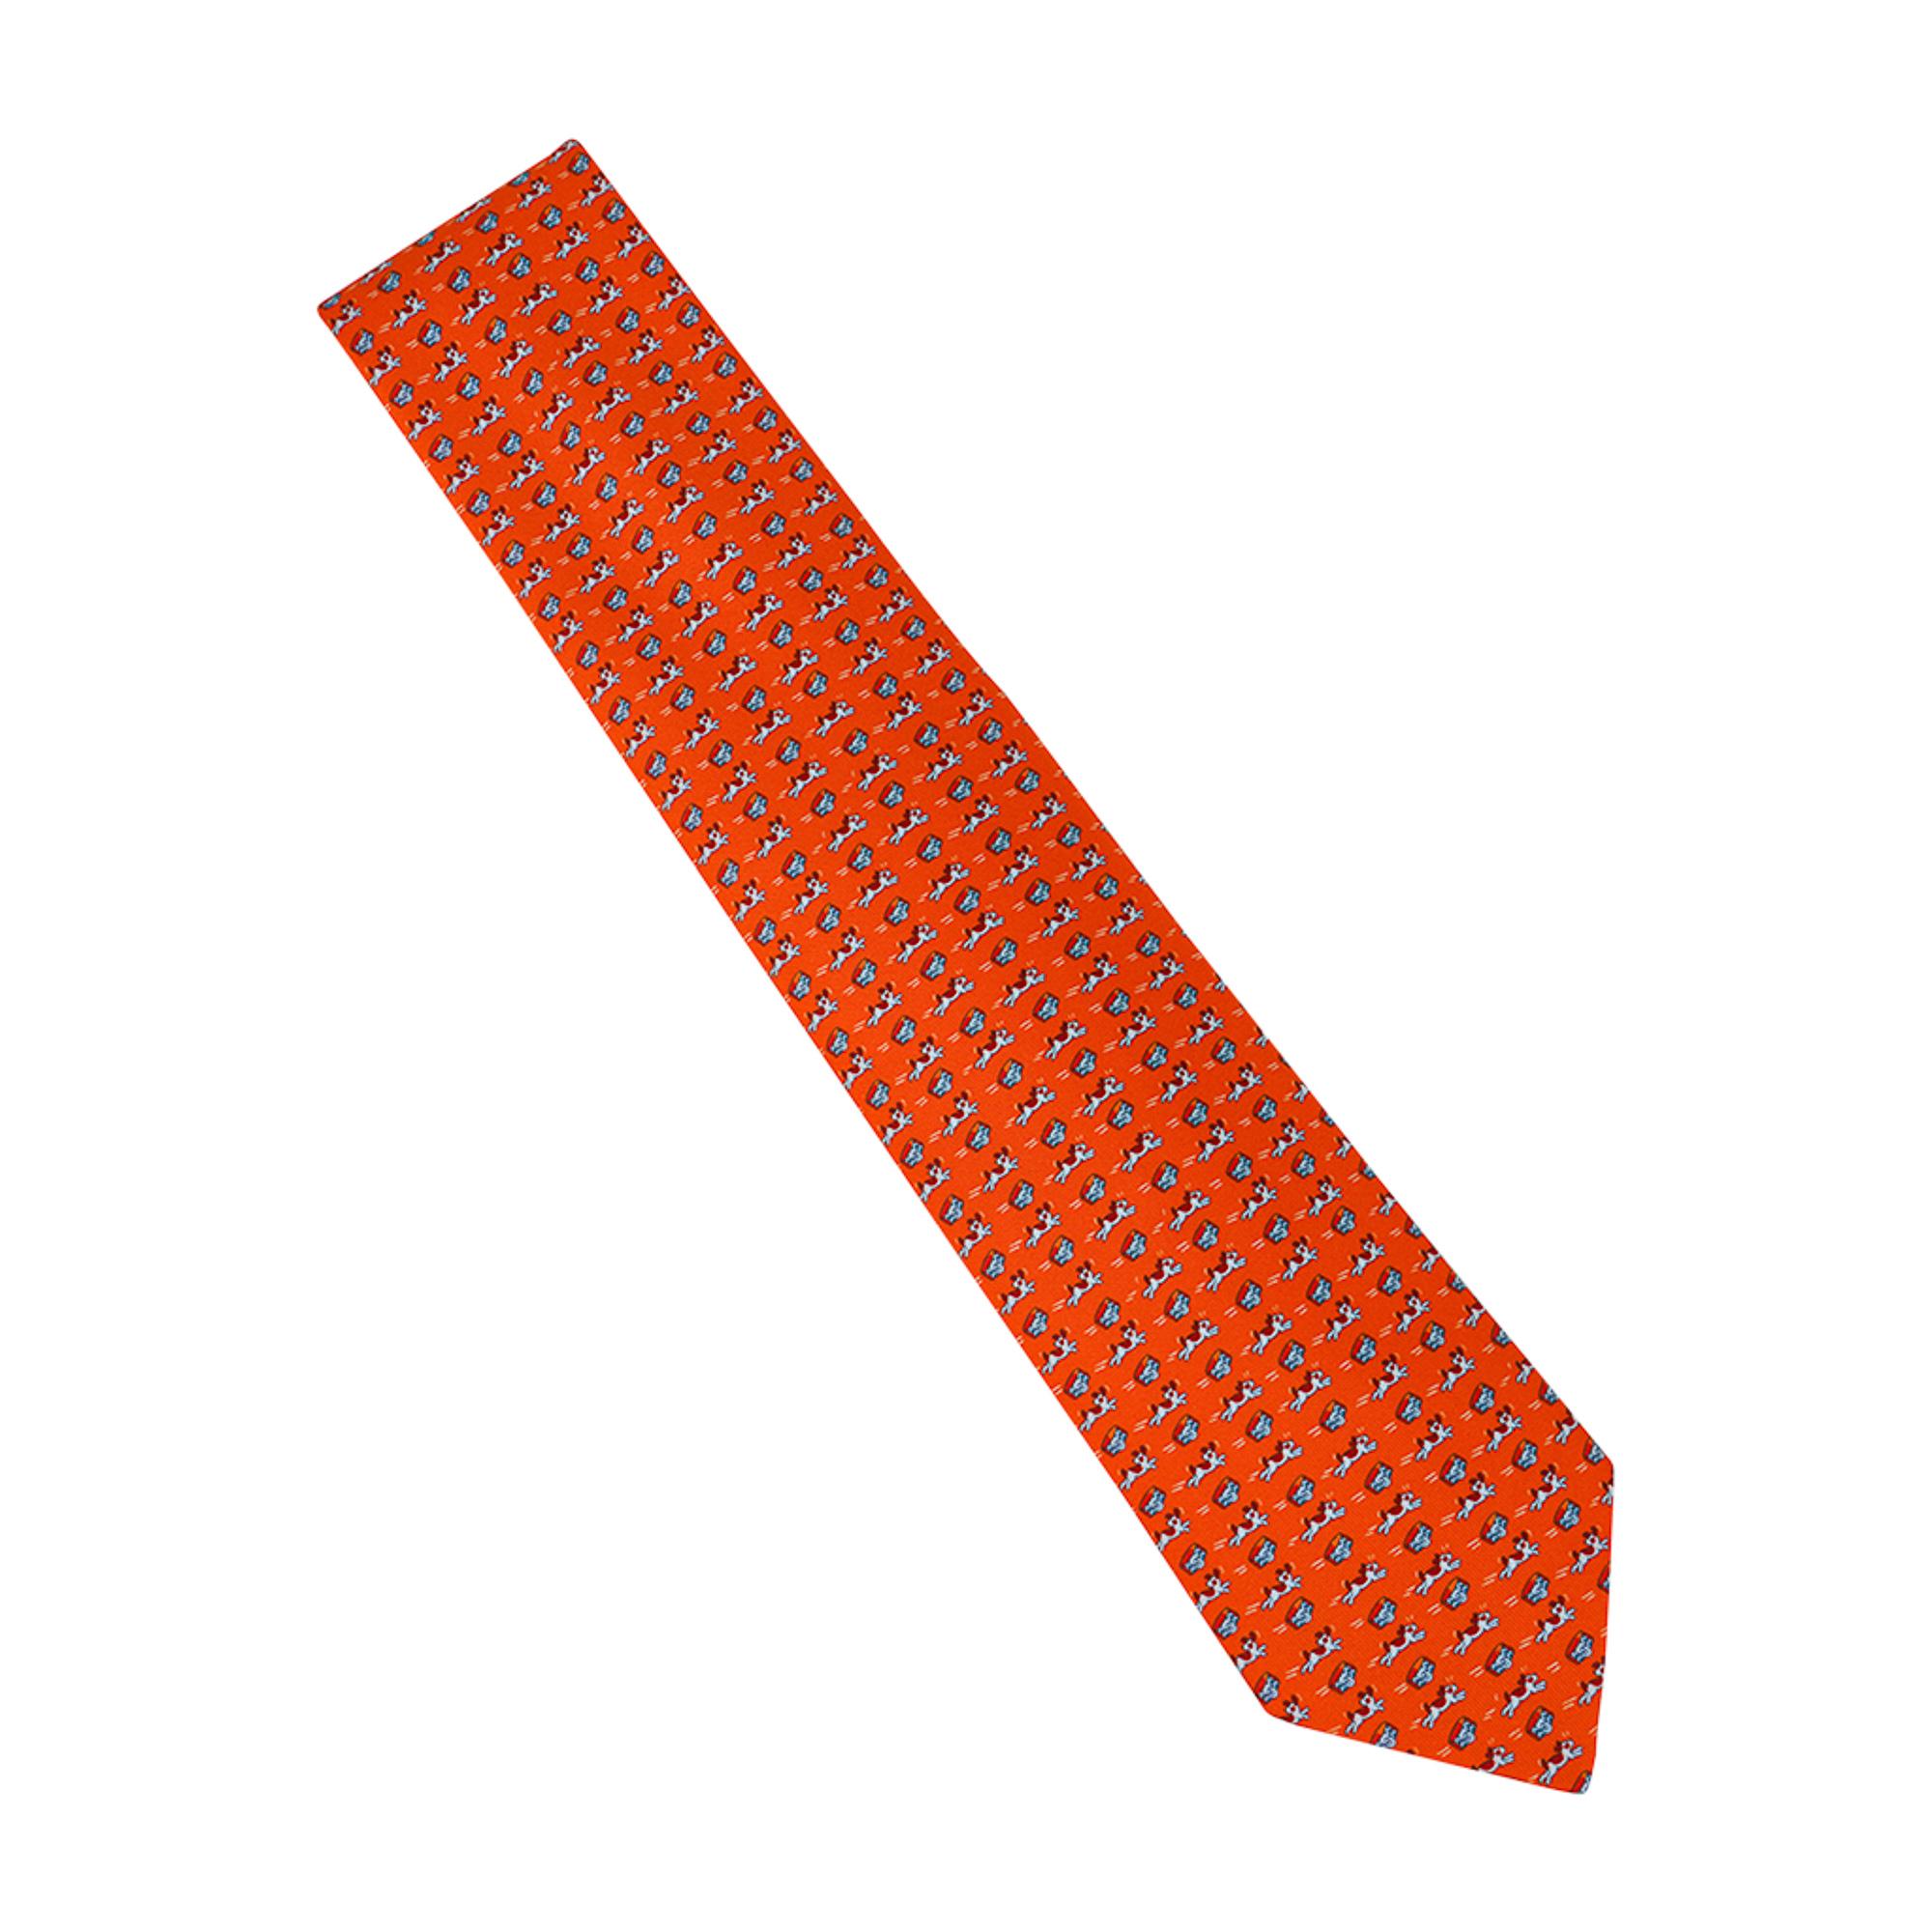 Hermes Tie Oh My Dog Orange Vif Silk Twill New w/ Box 1